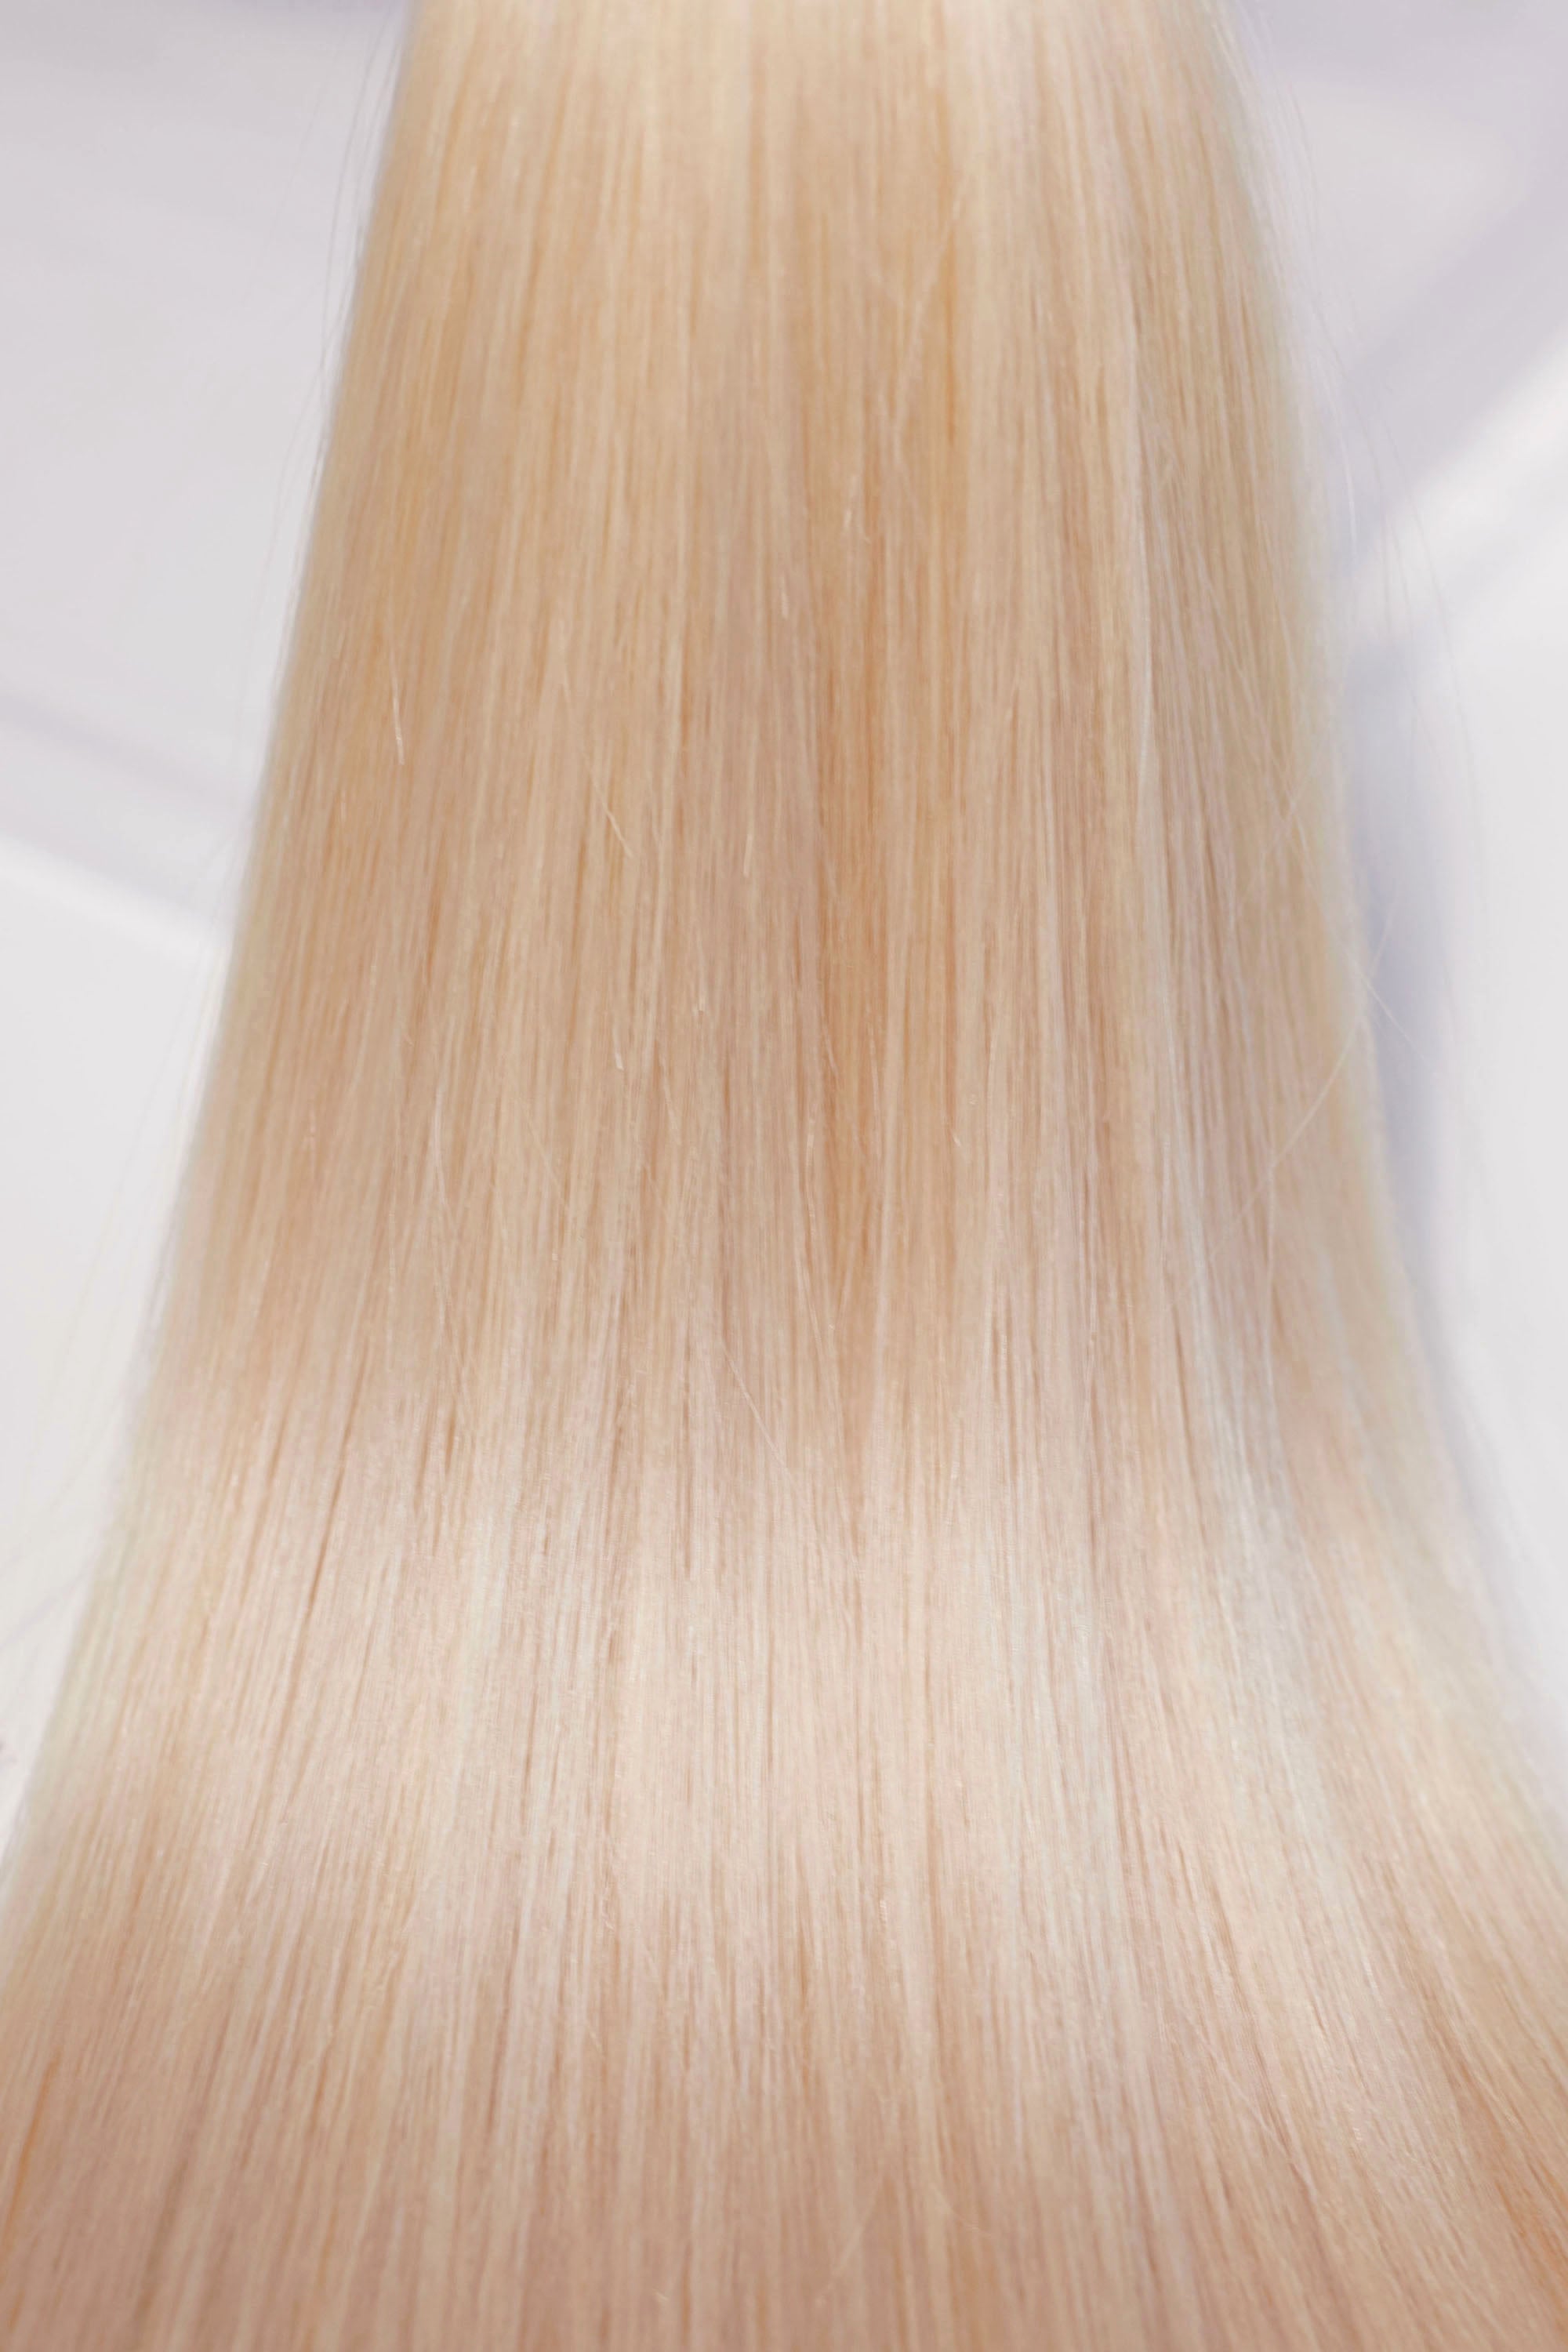 Behair professional Keratin Tip "Premium" 22" (55cm) Natural Straight Platinum Blond #60 - 25g (1g each pcs) hair extensions